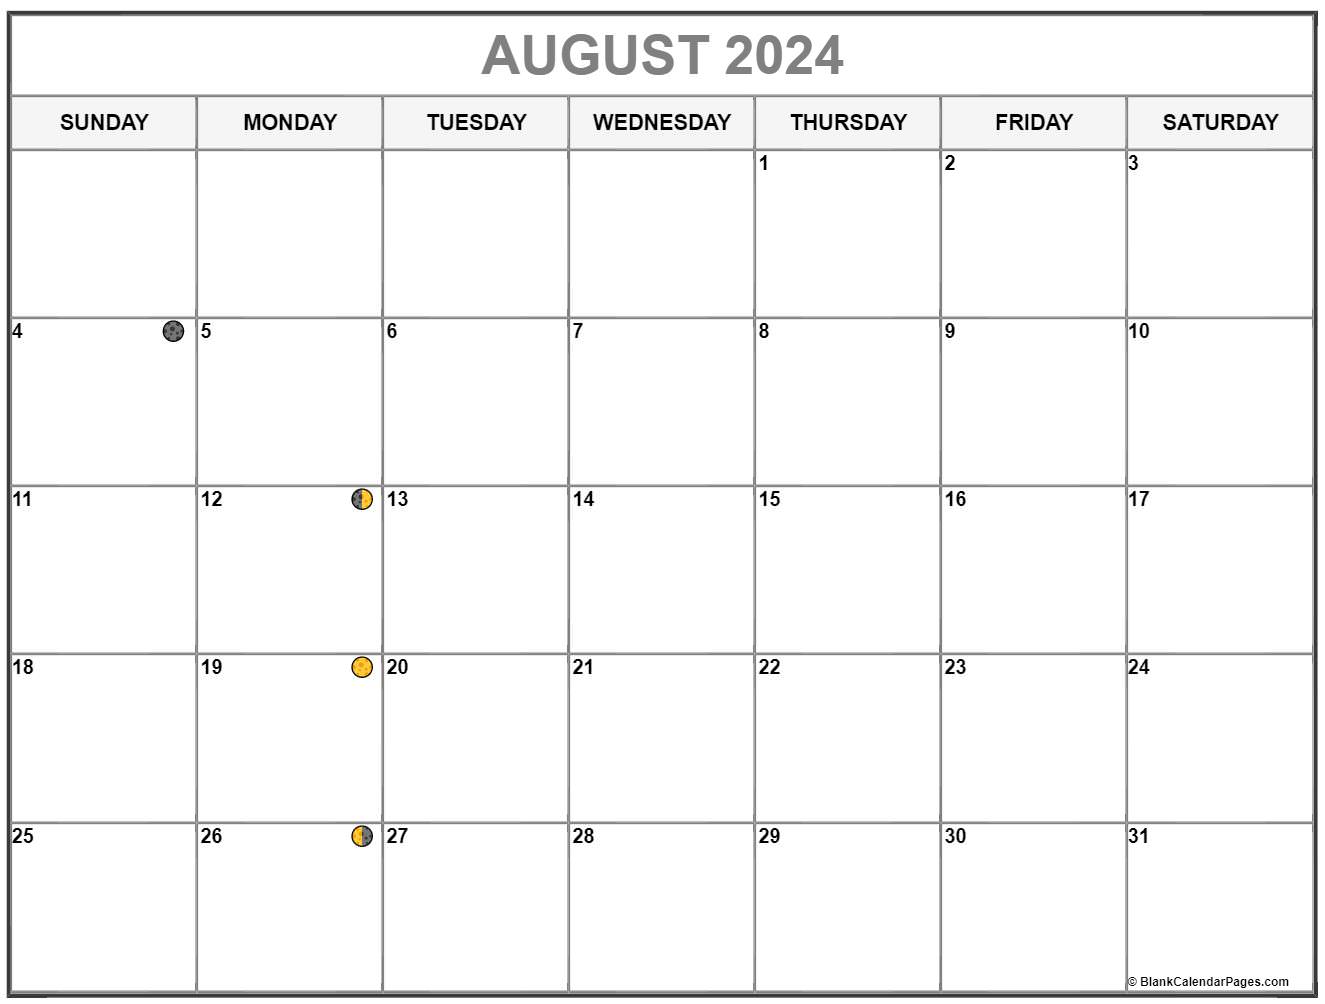 August 2024 Lunar Calendar Moon Phase Calendar